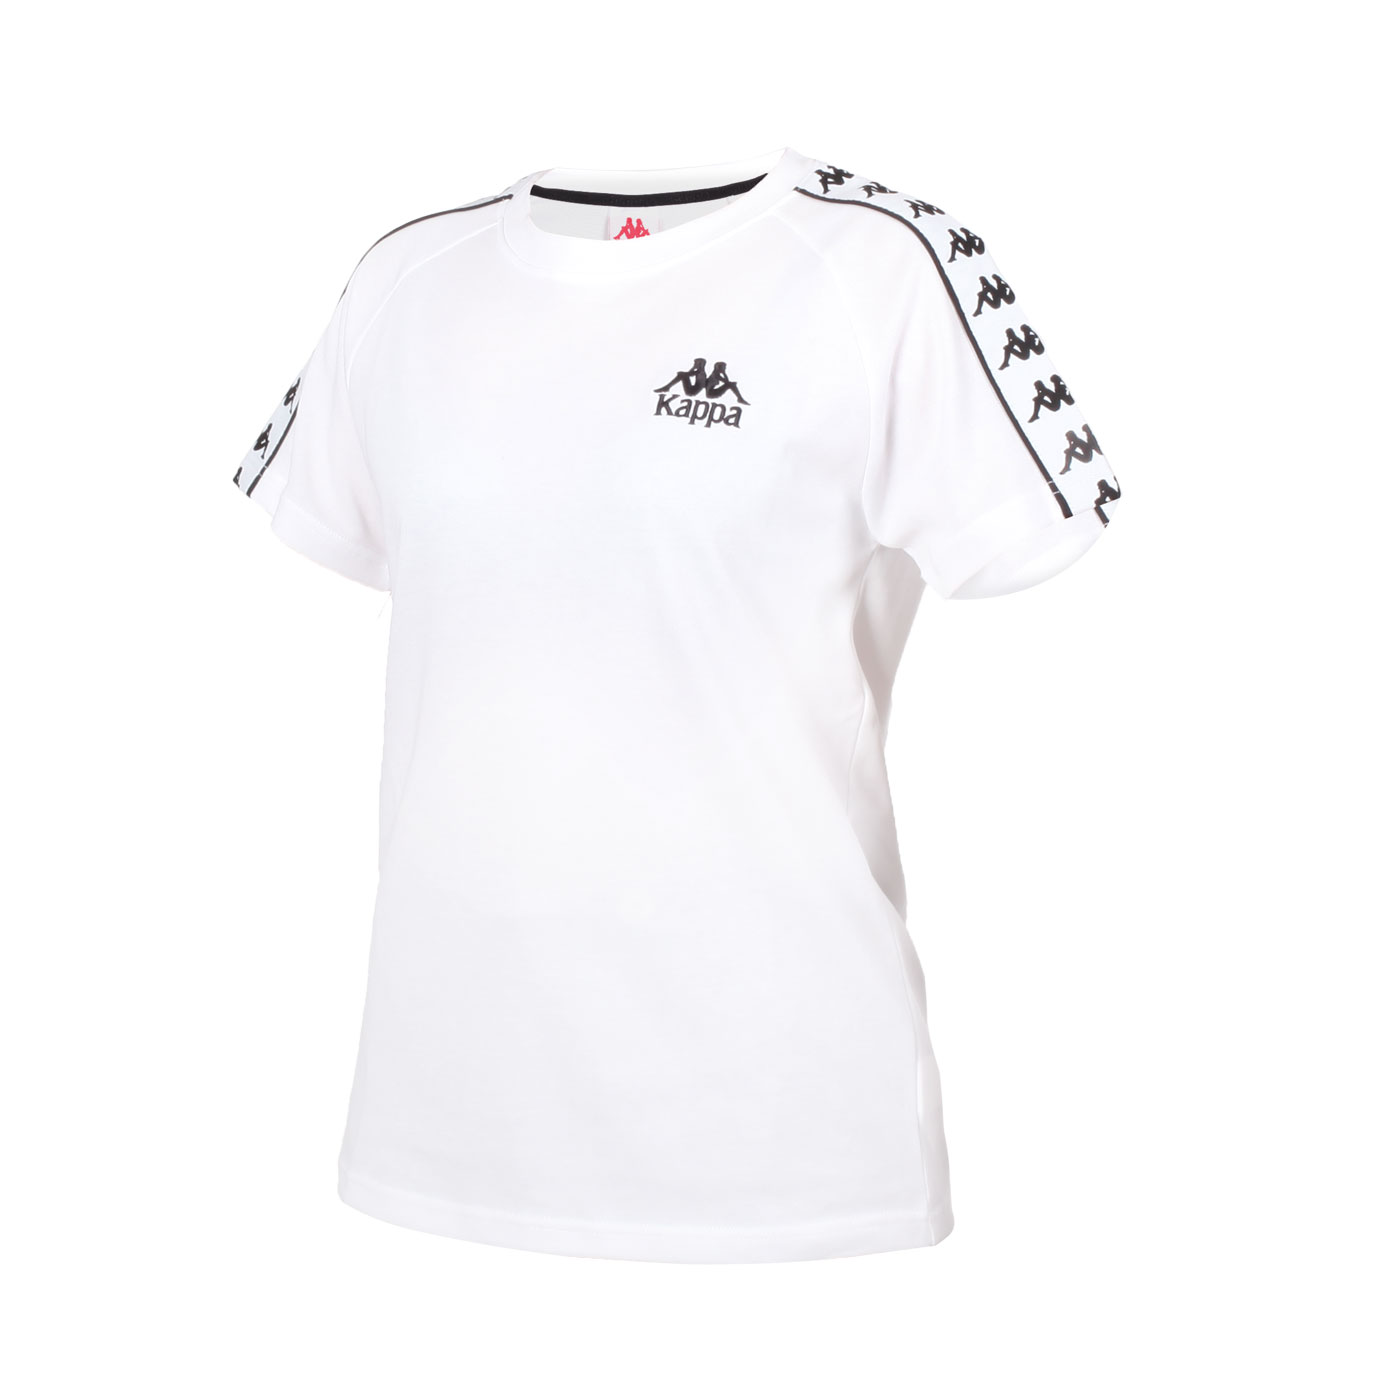 KAPPA 男女款圓領短袖T恤  381R7XW-001 - 白黑